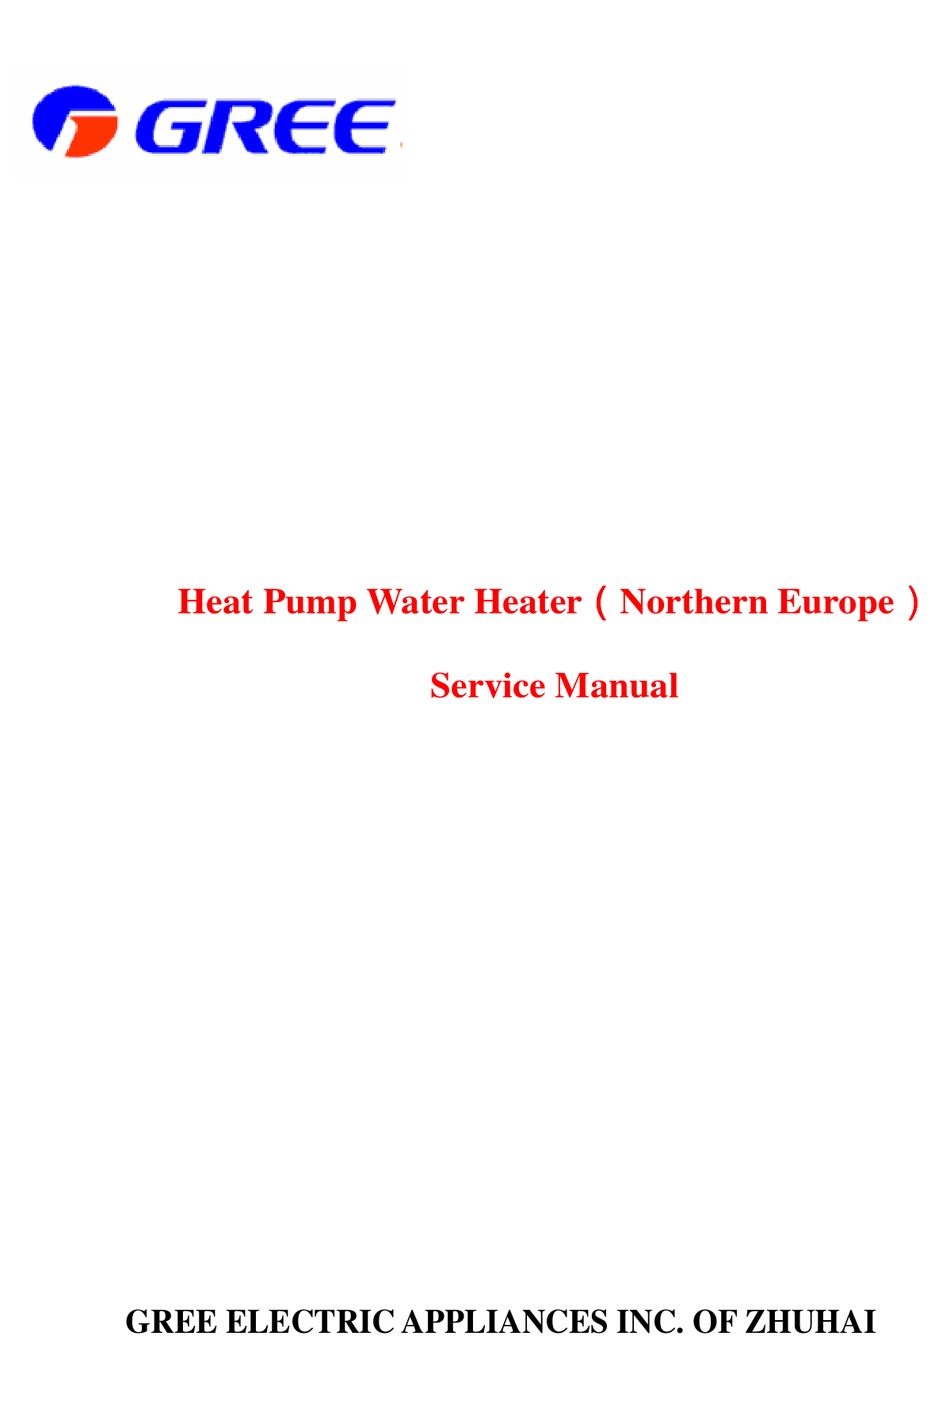 gree-heat-pump-water-heater-service-manual-pdf-download-manualslib